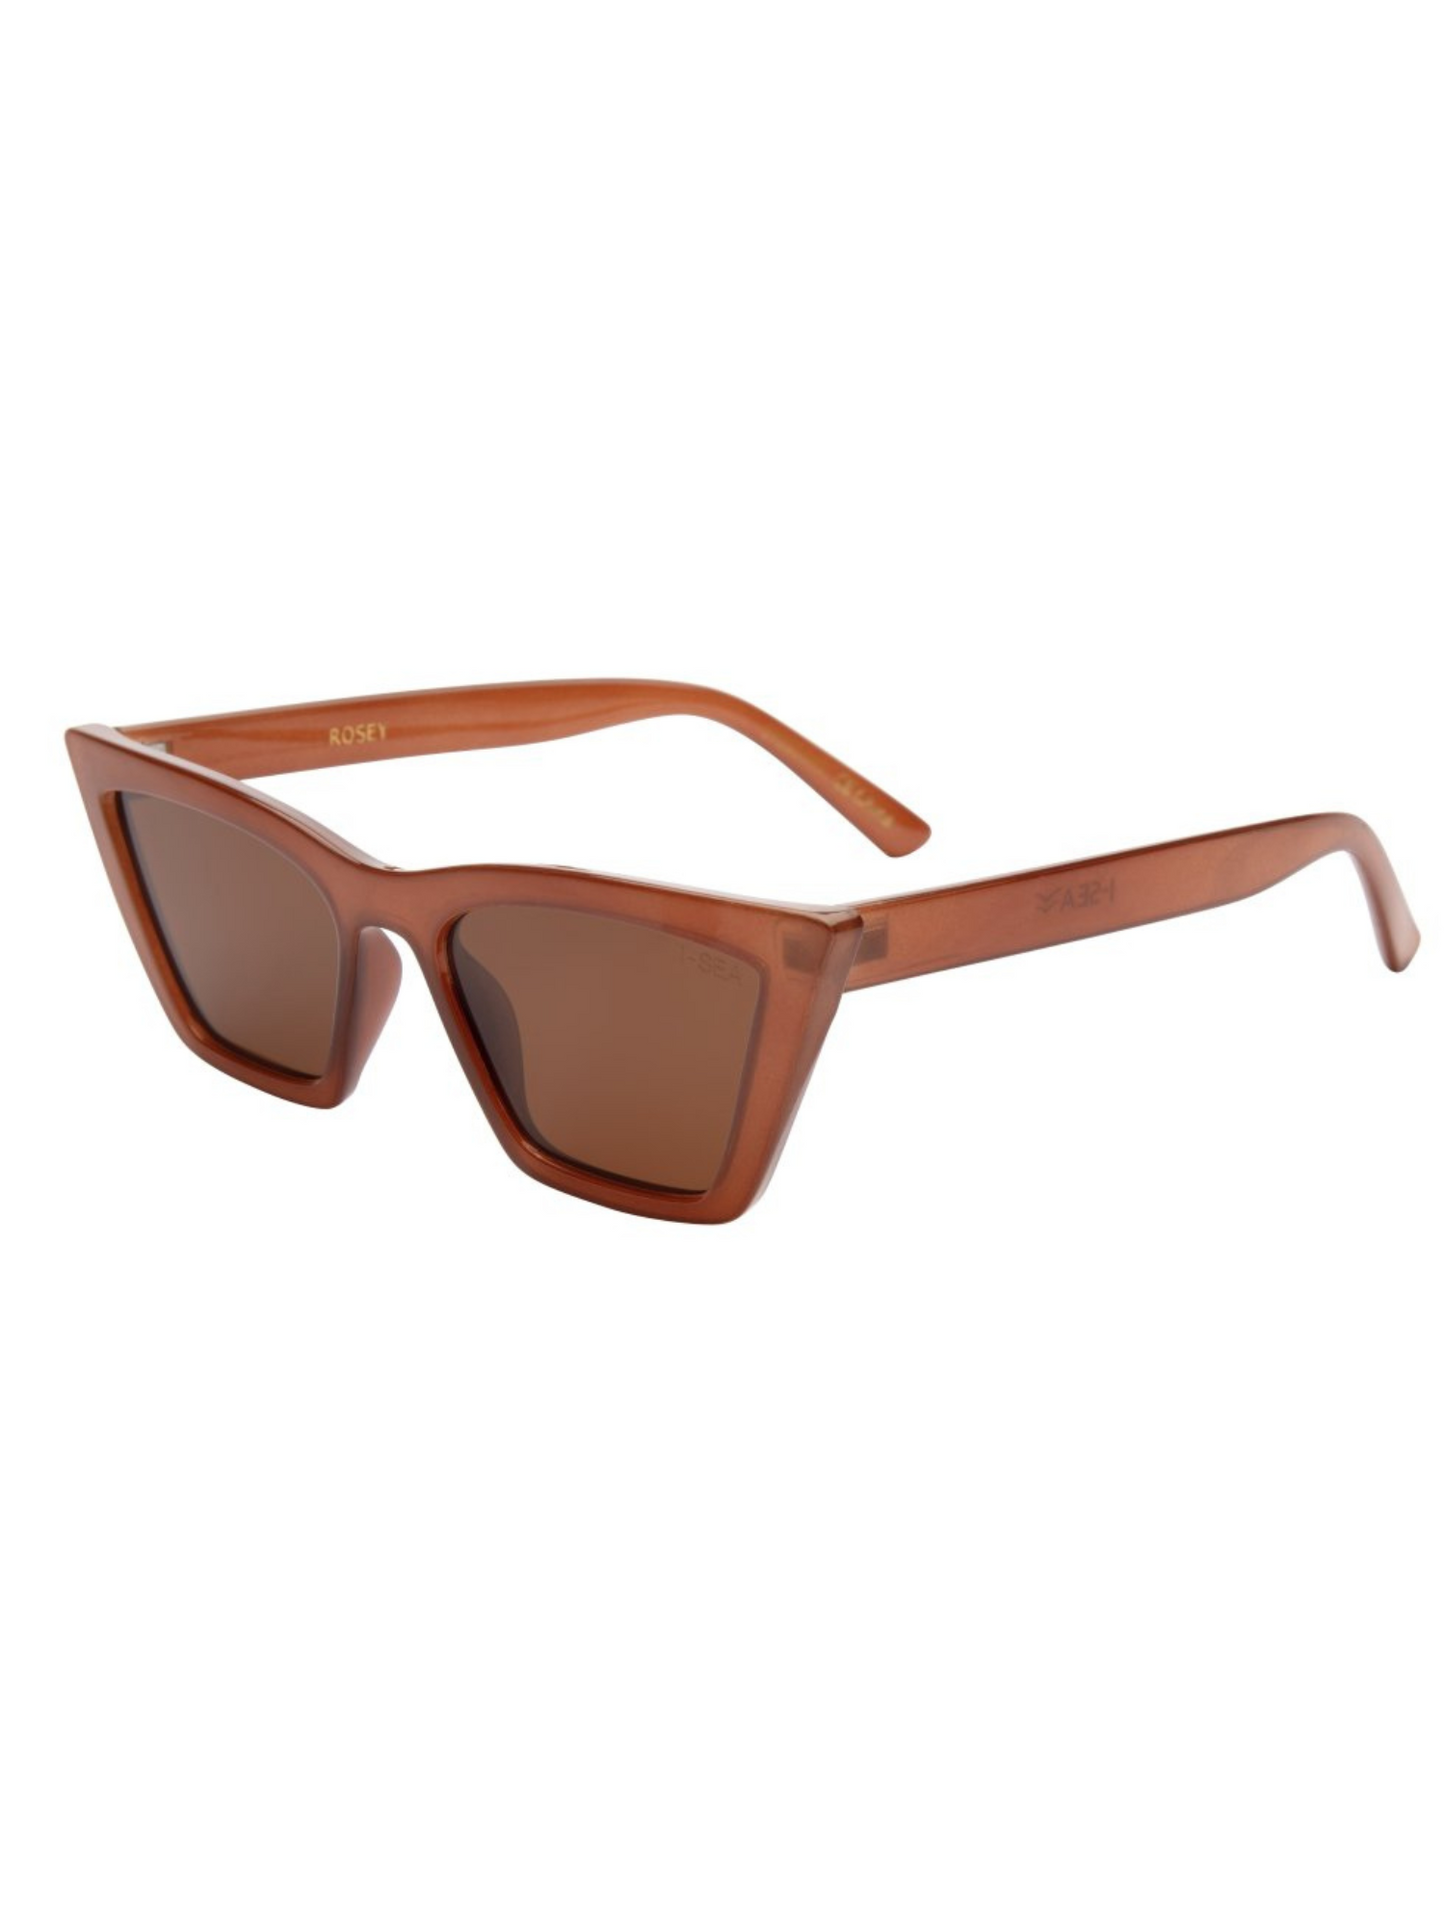 Rosey Sunglasses - Coffee/Brown